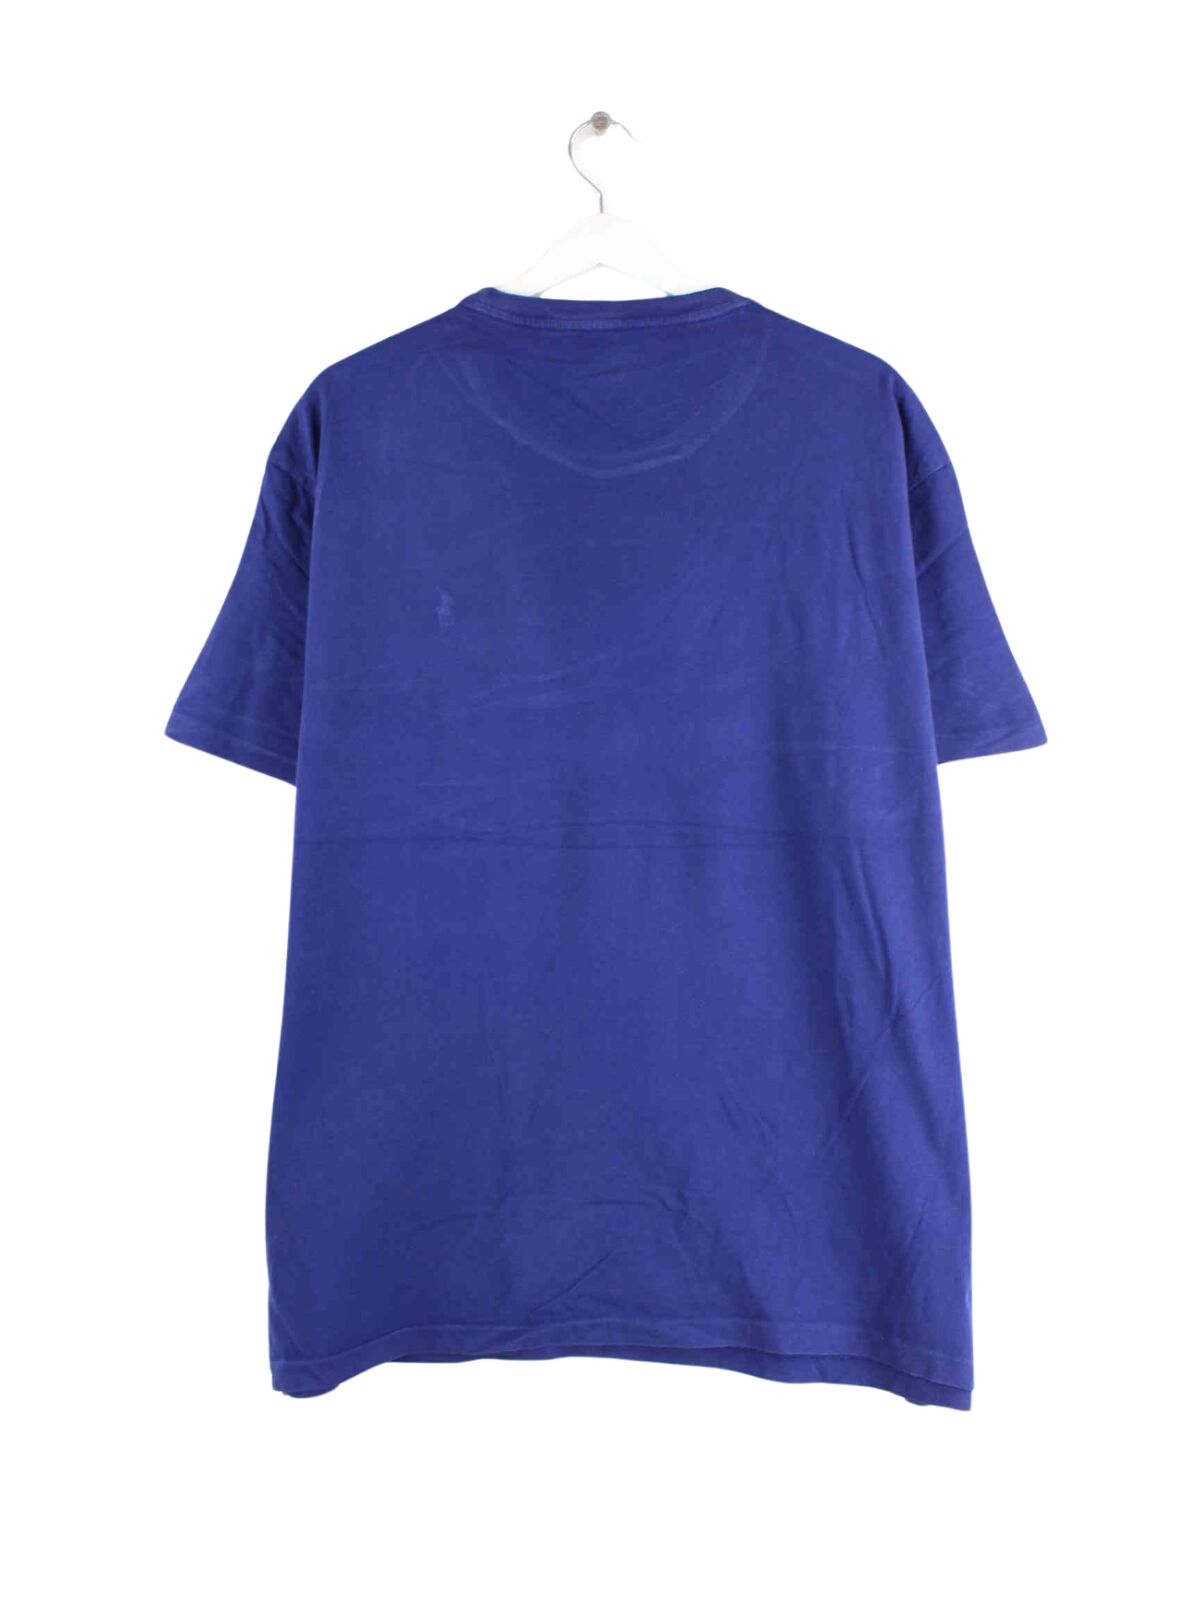 Ralph Lauren Basic T-Shirt Blau L (back image)